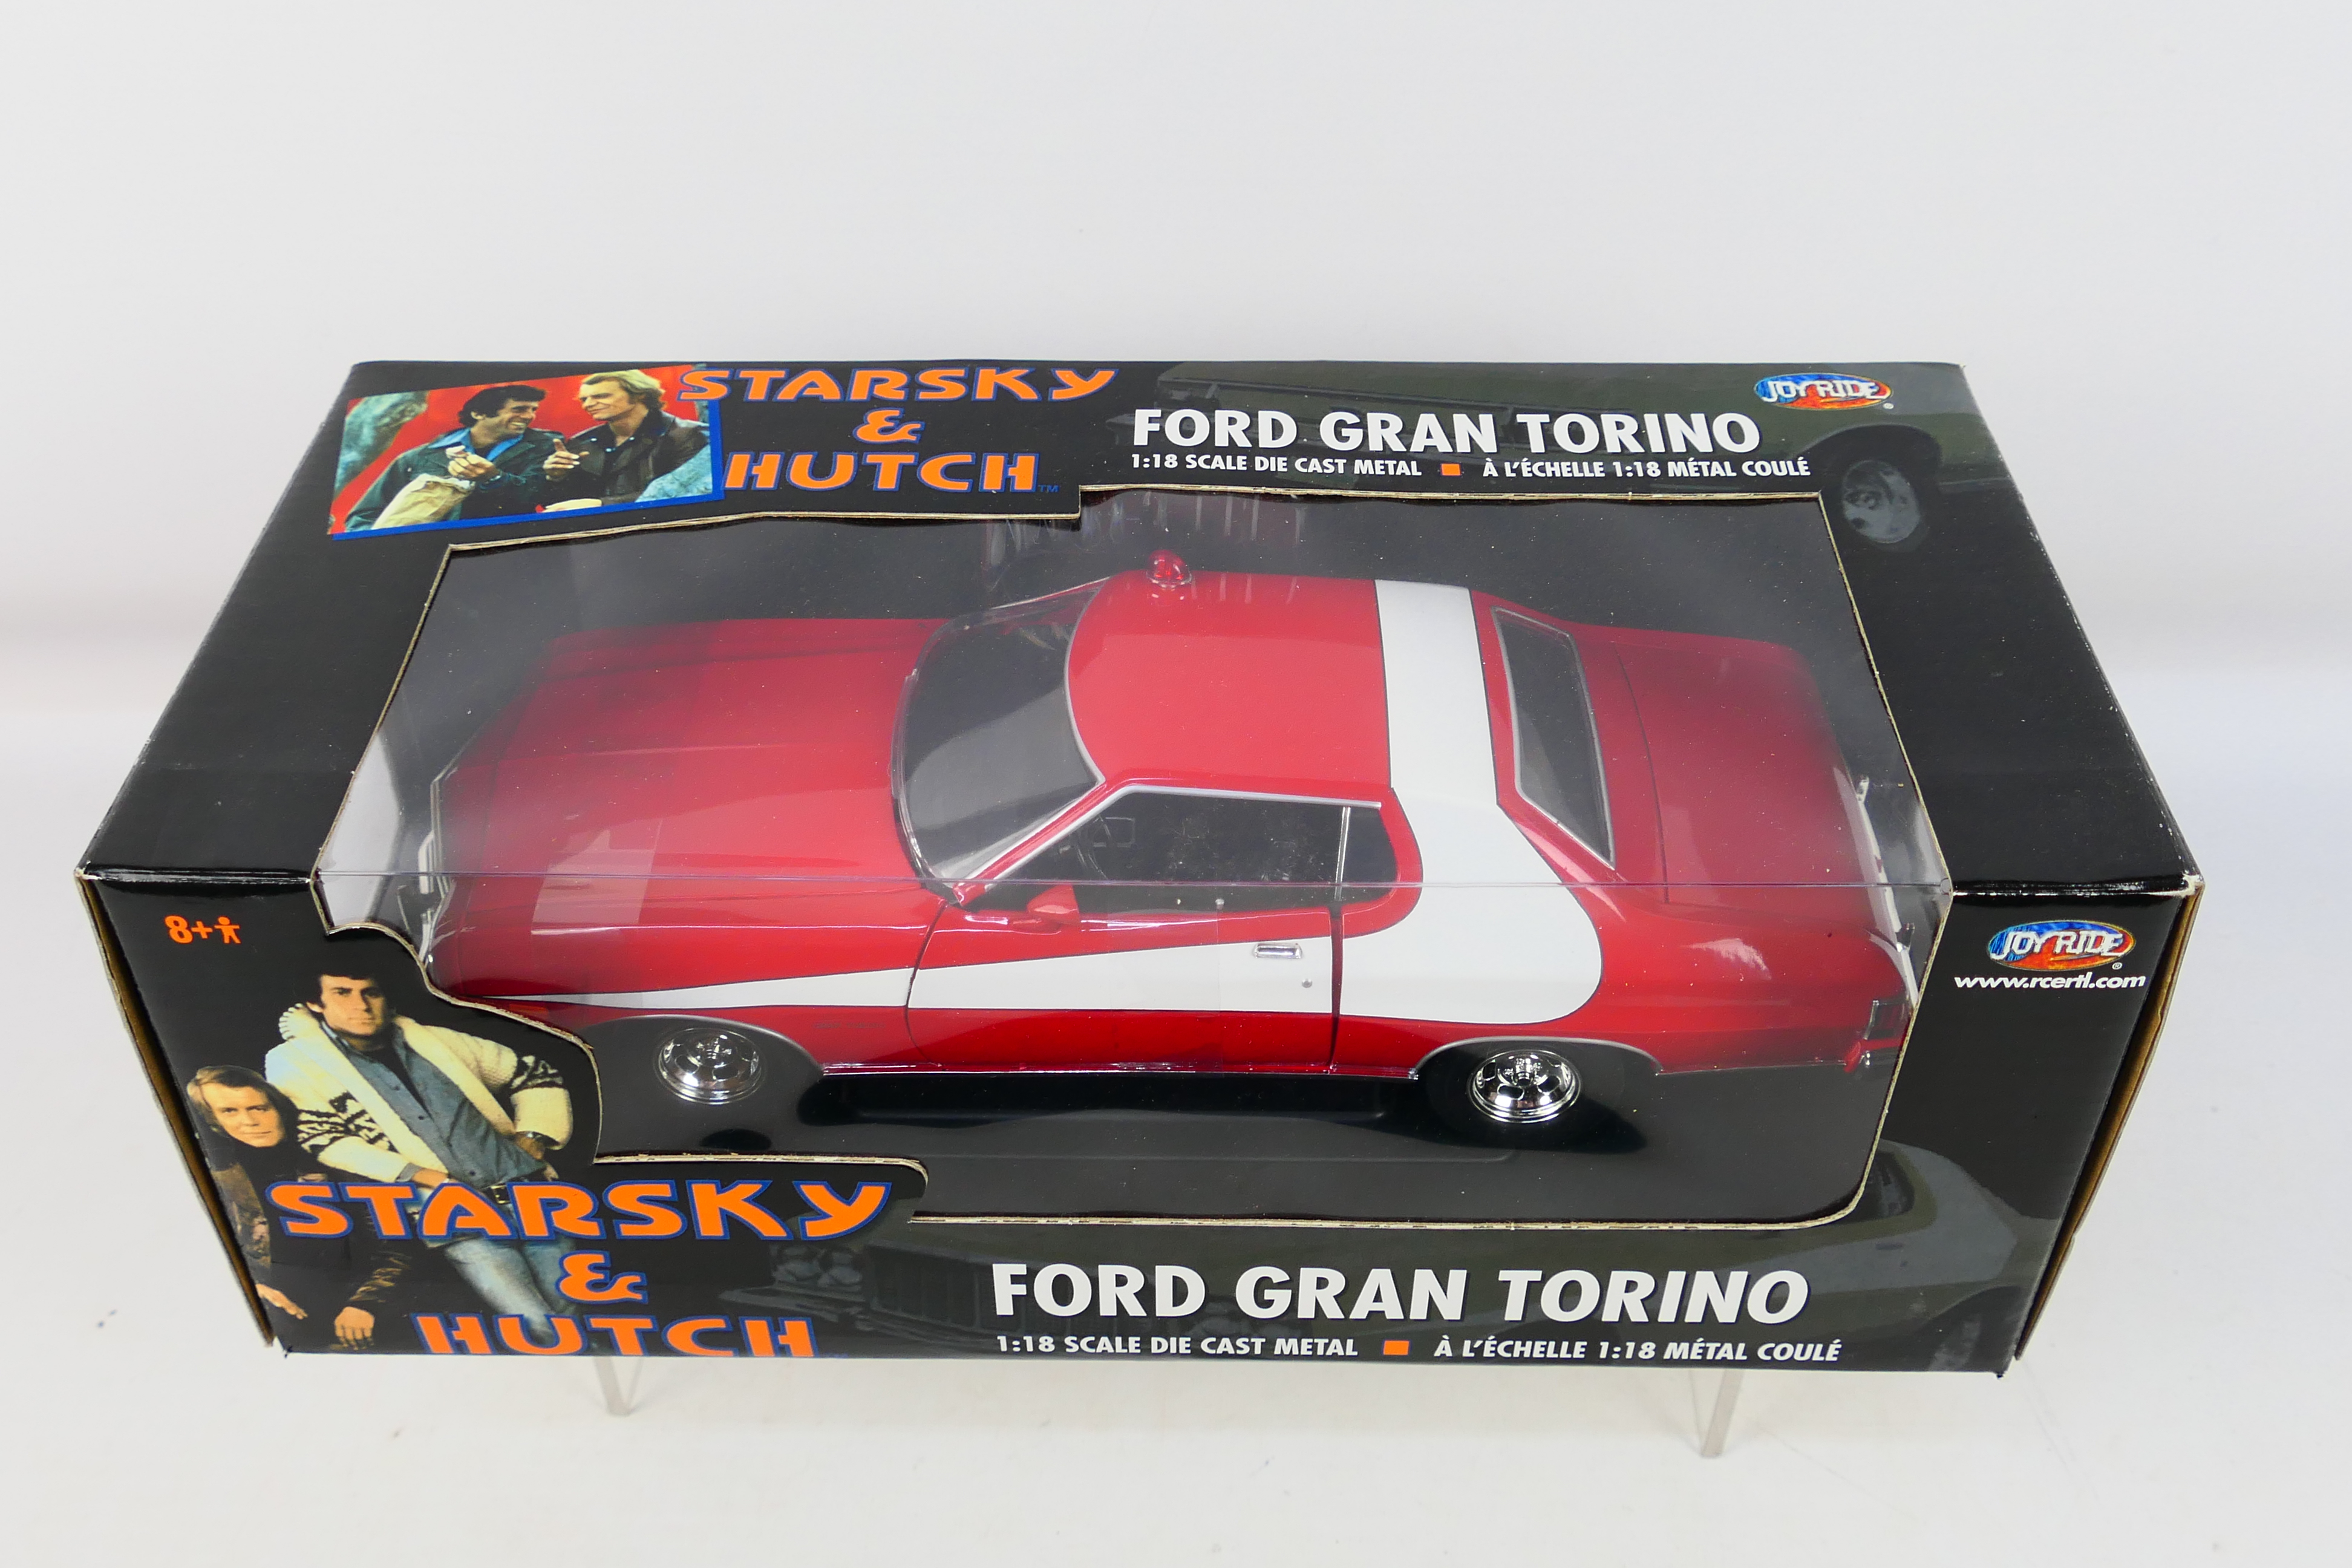 Joyride - A boxed Joyride #33151 1:18 scale 'Starsky & Hutch' Ford Gran Torino. - Image 2 of 5